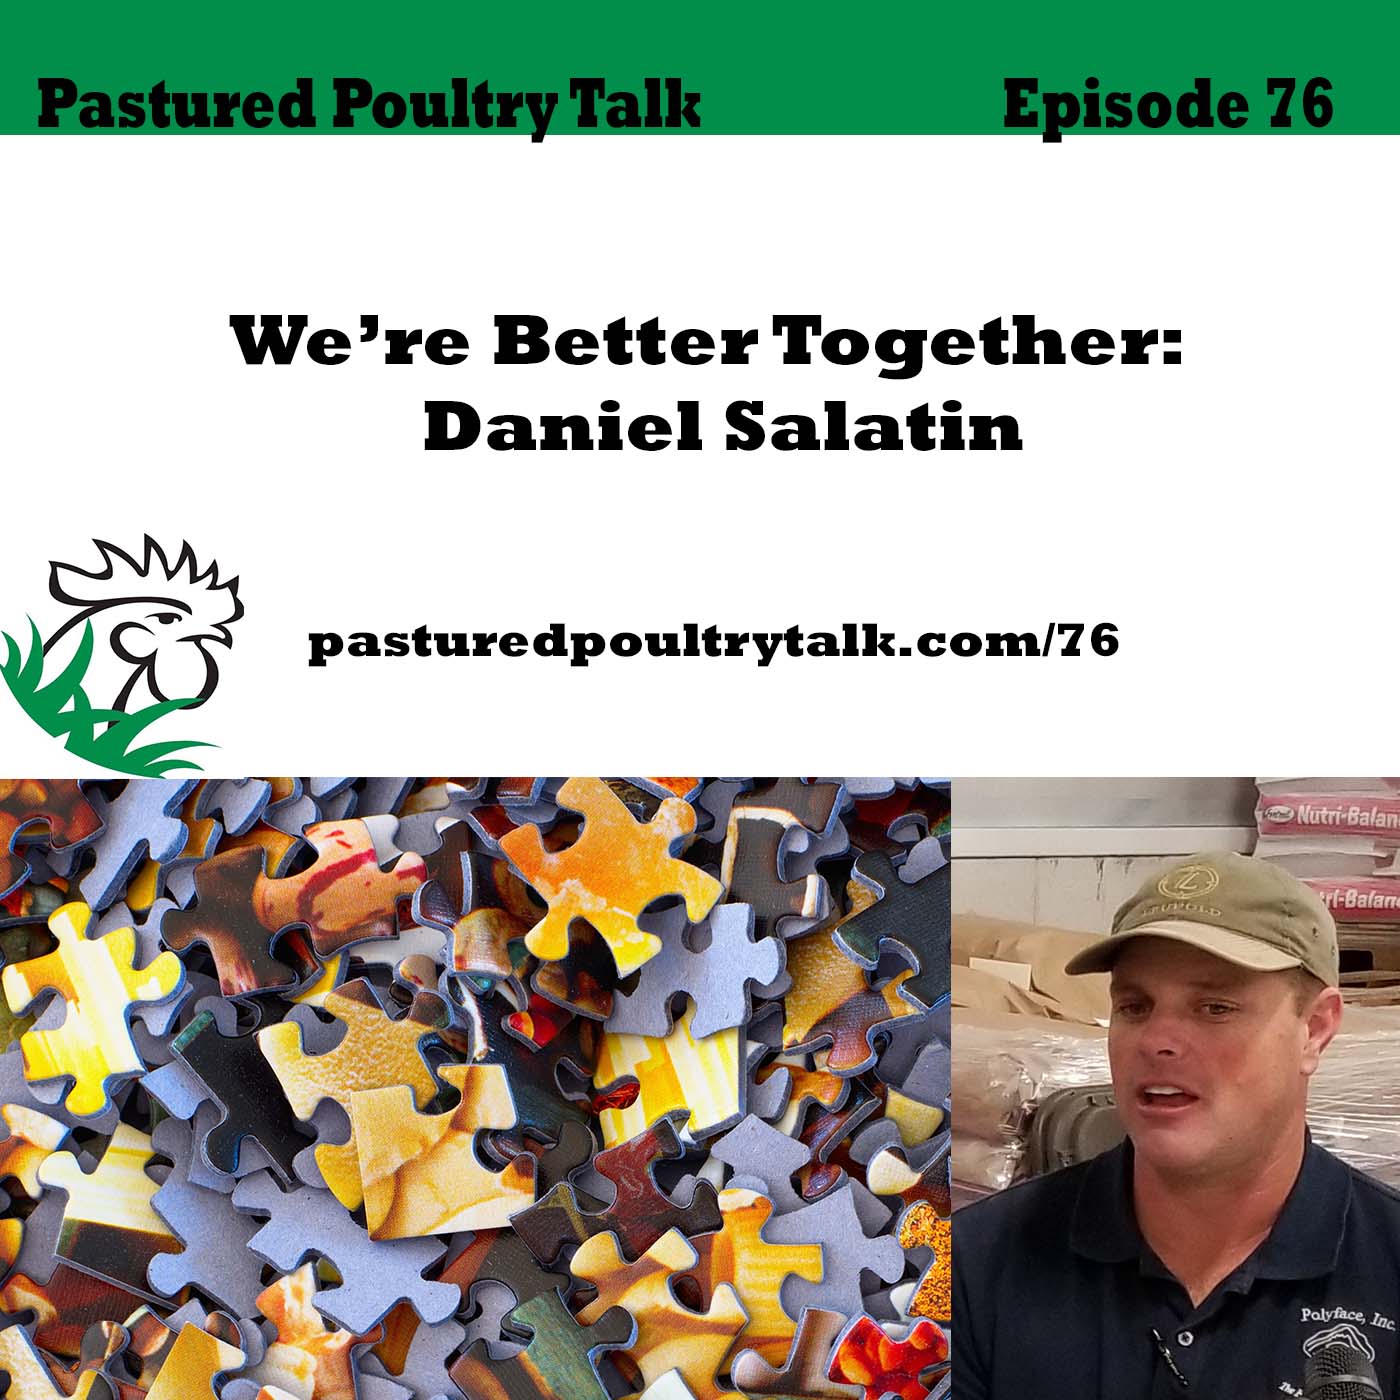 Episode artwork for Pastured Poultry Talk Episode 76 with Daniel Salatin.